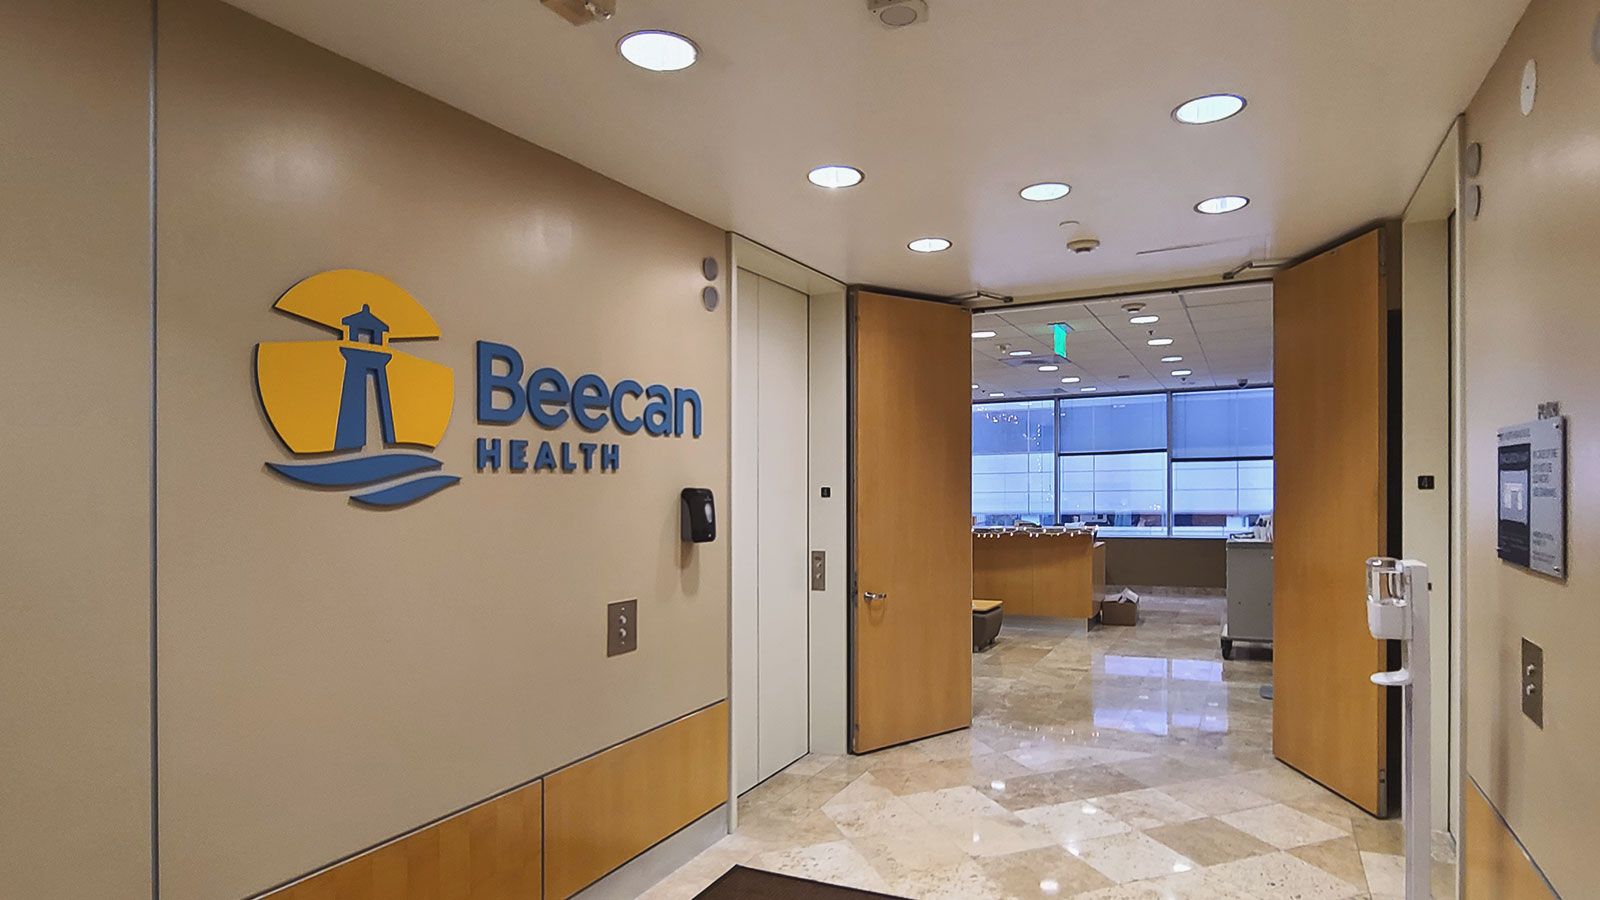 beecan health lobby sign